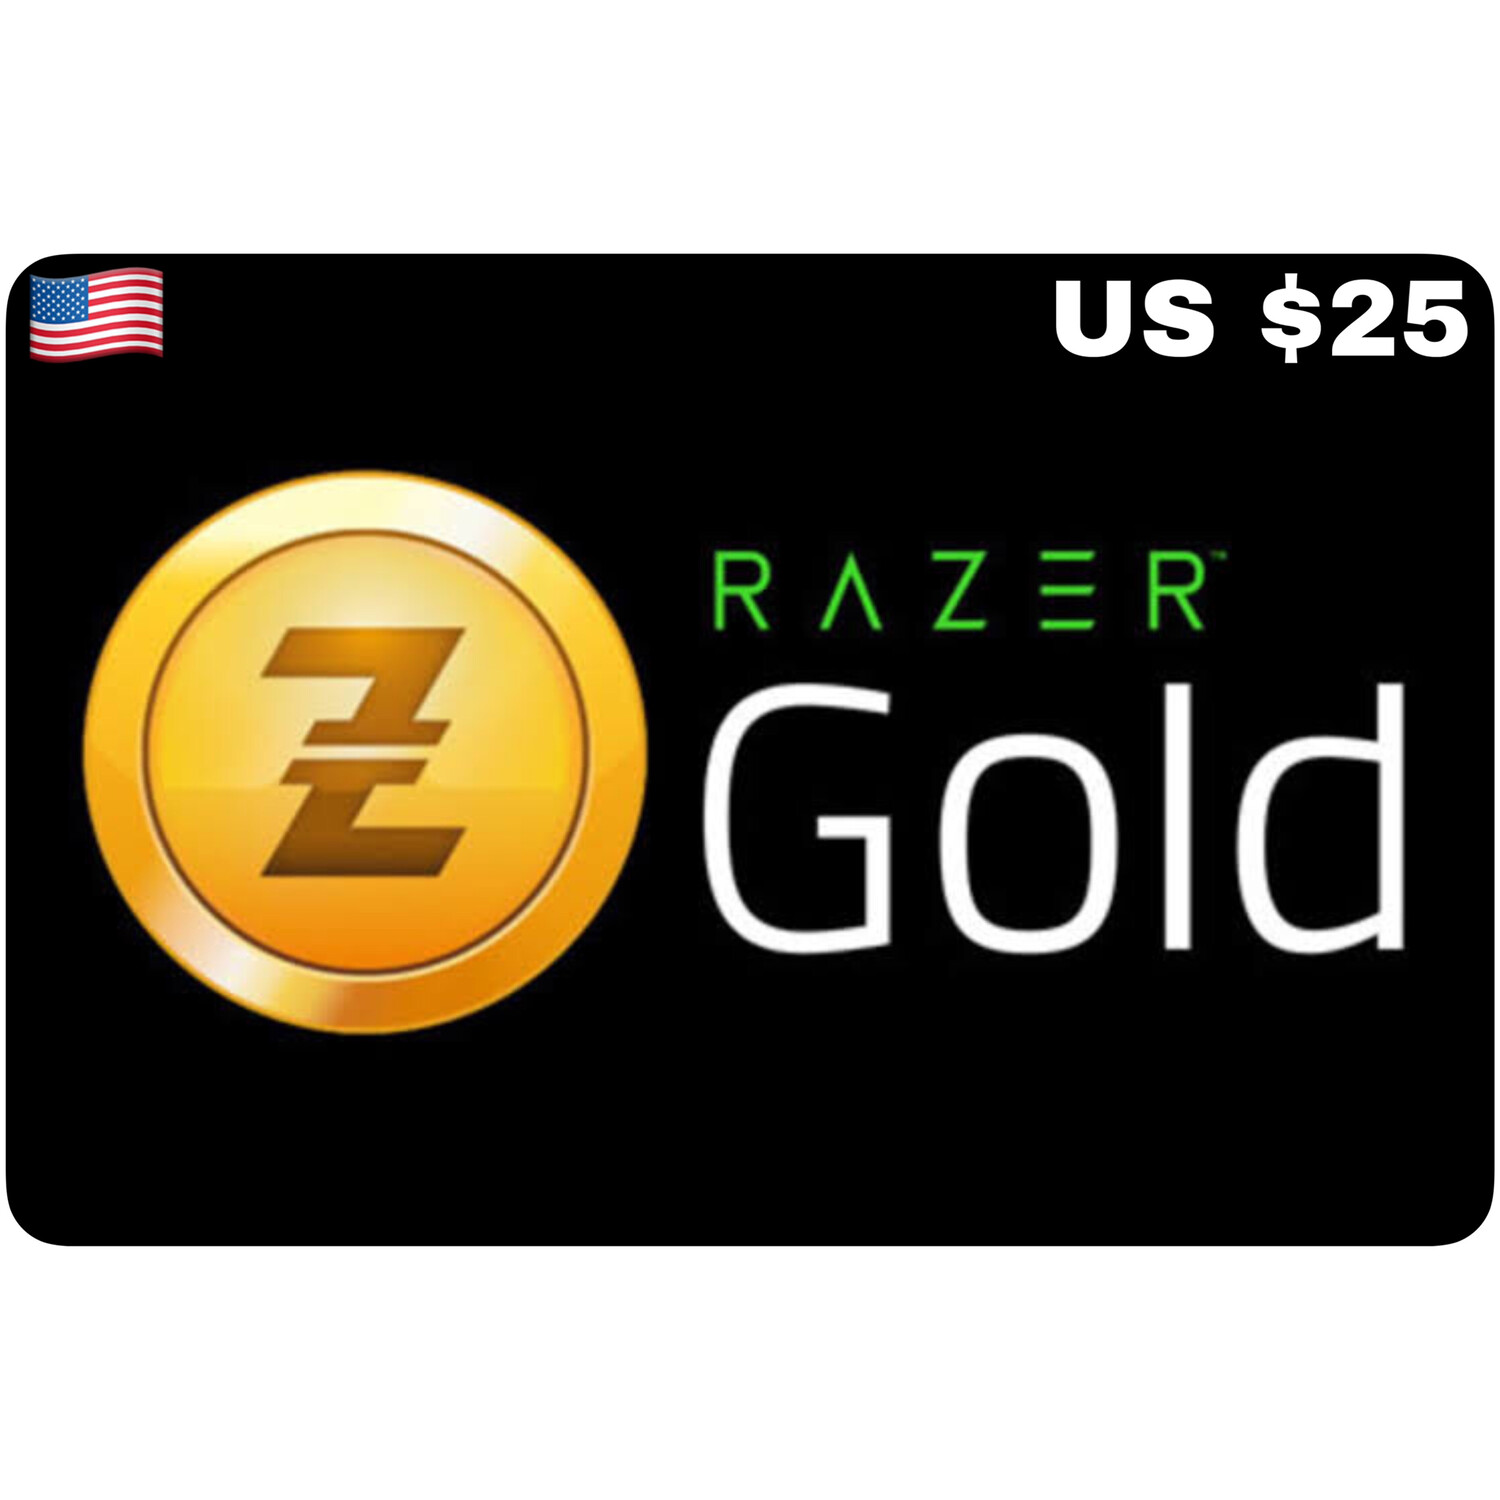 Razer Gold Pin US $25